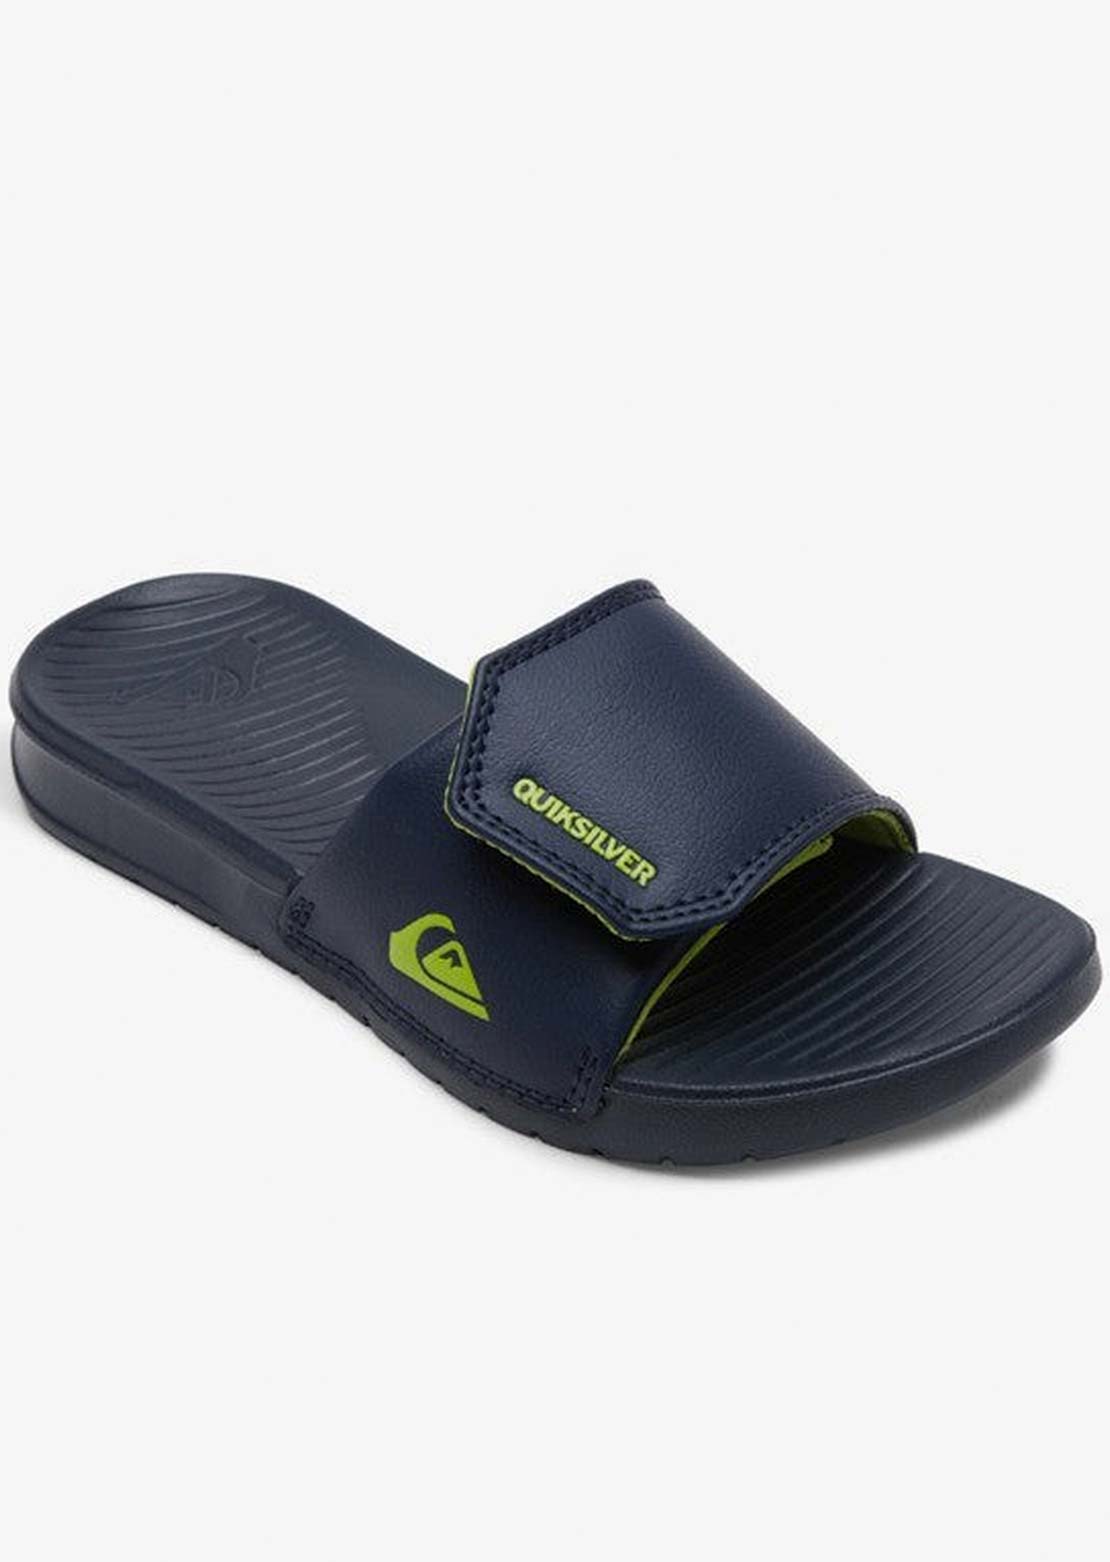 Quiksilver Junior Bright Coast Adjustable Sandals Blue/Blue/Green